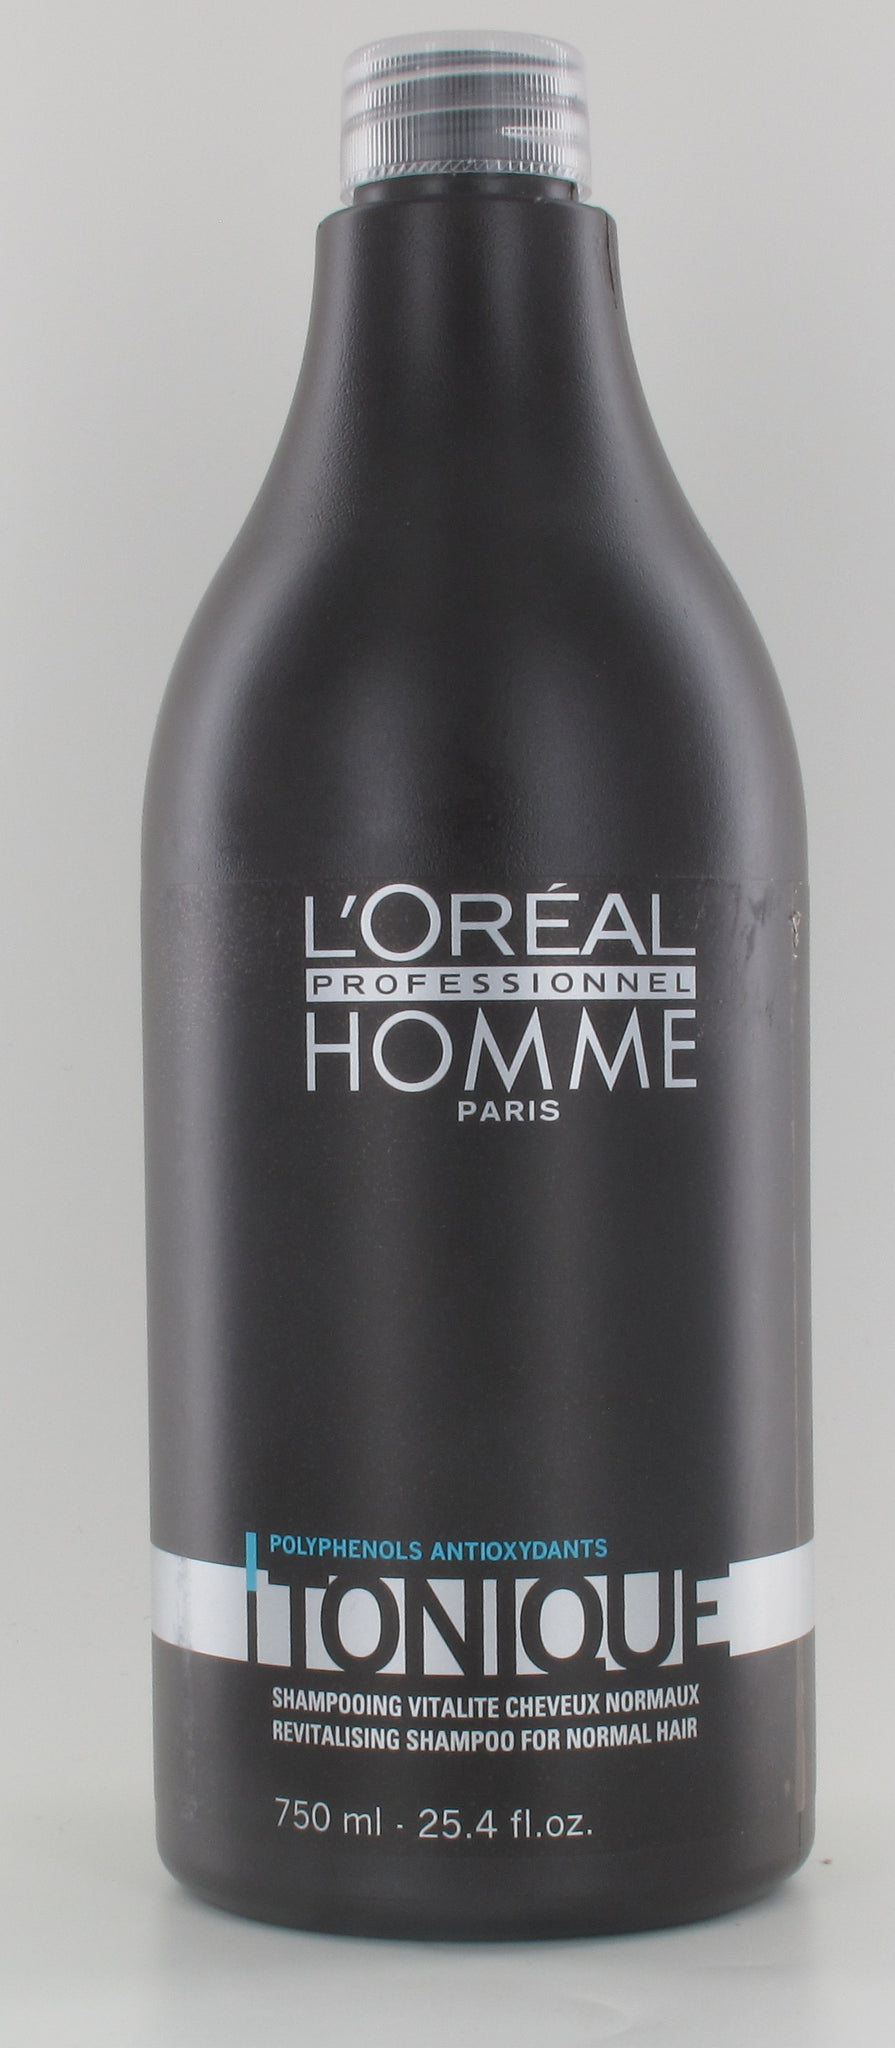 Loreal Homme Polyphenols Antioxydants Tonique Shampoo 25.4 Oz